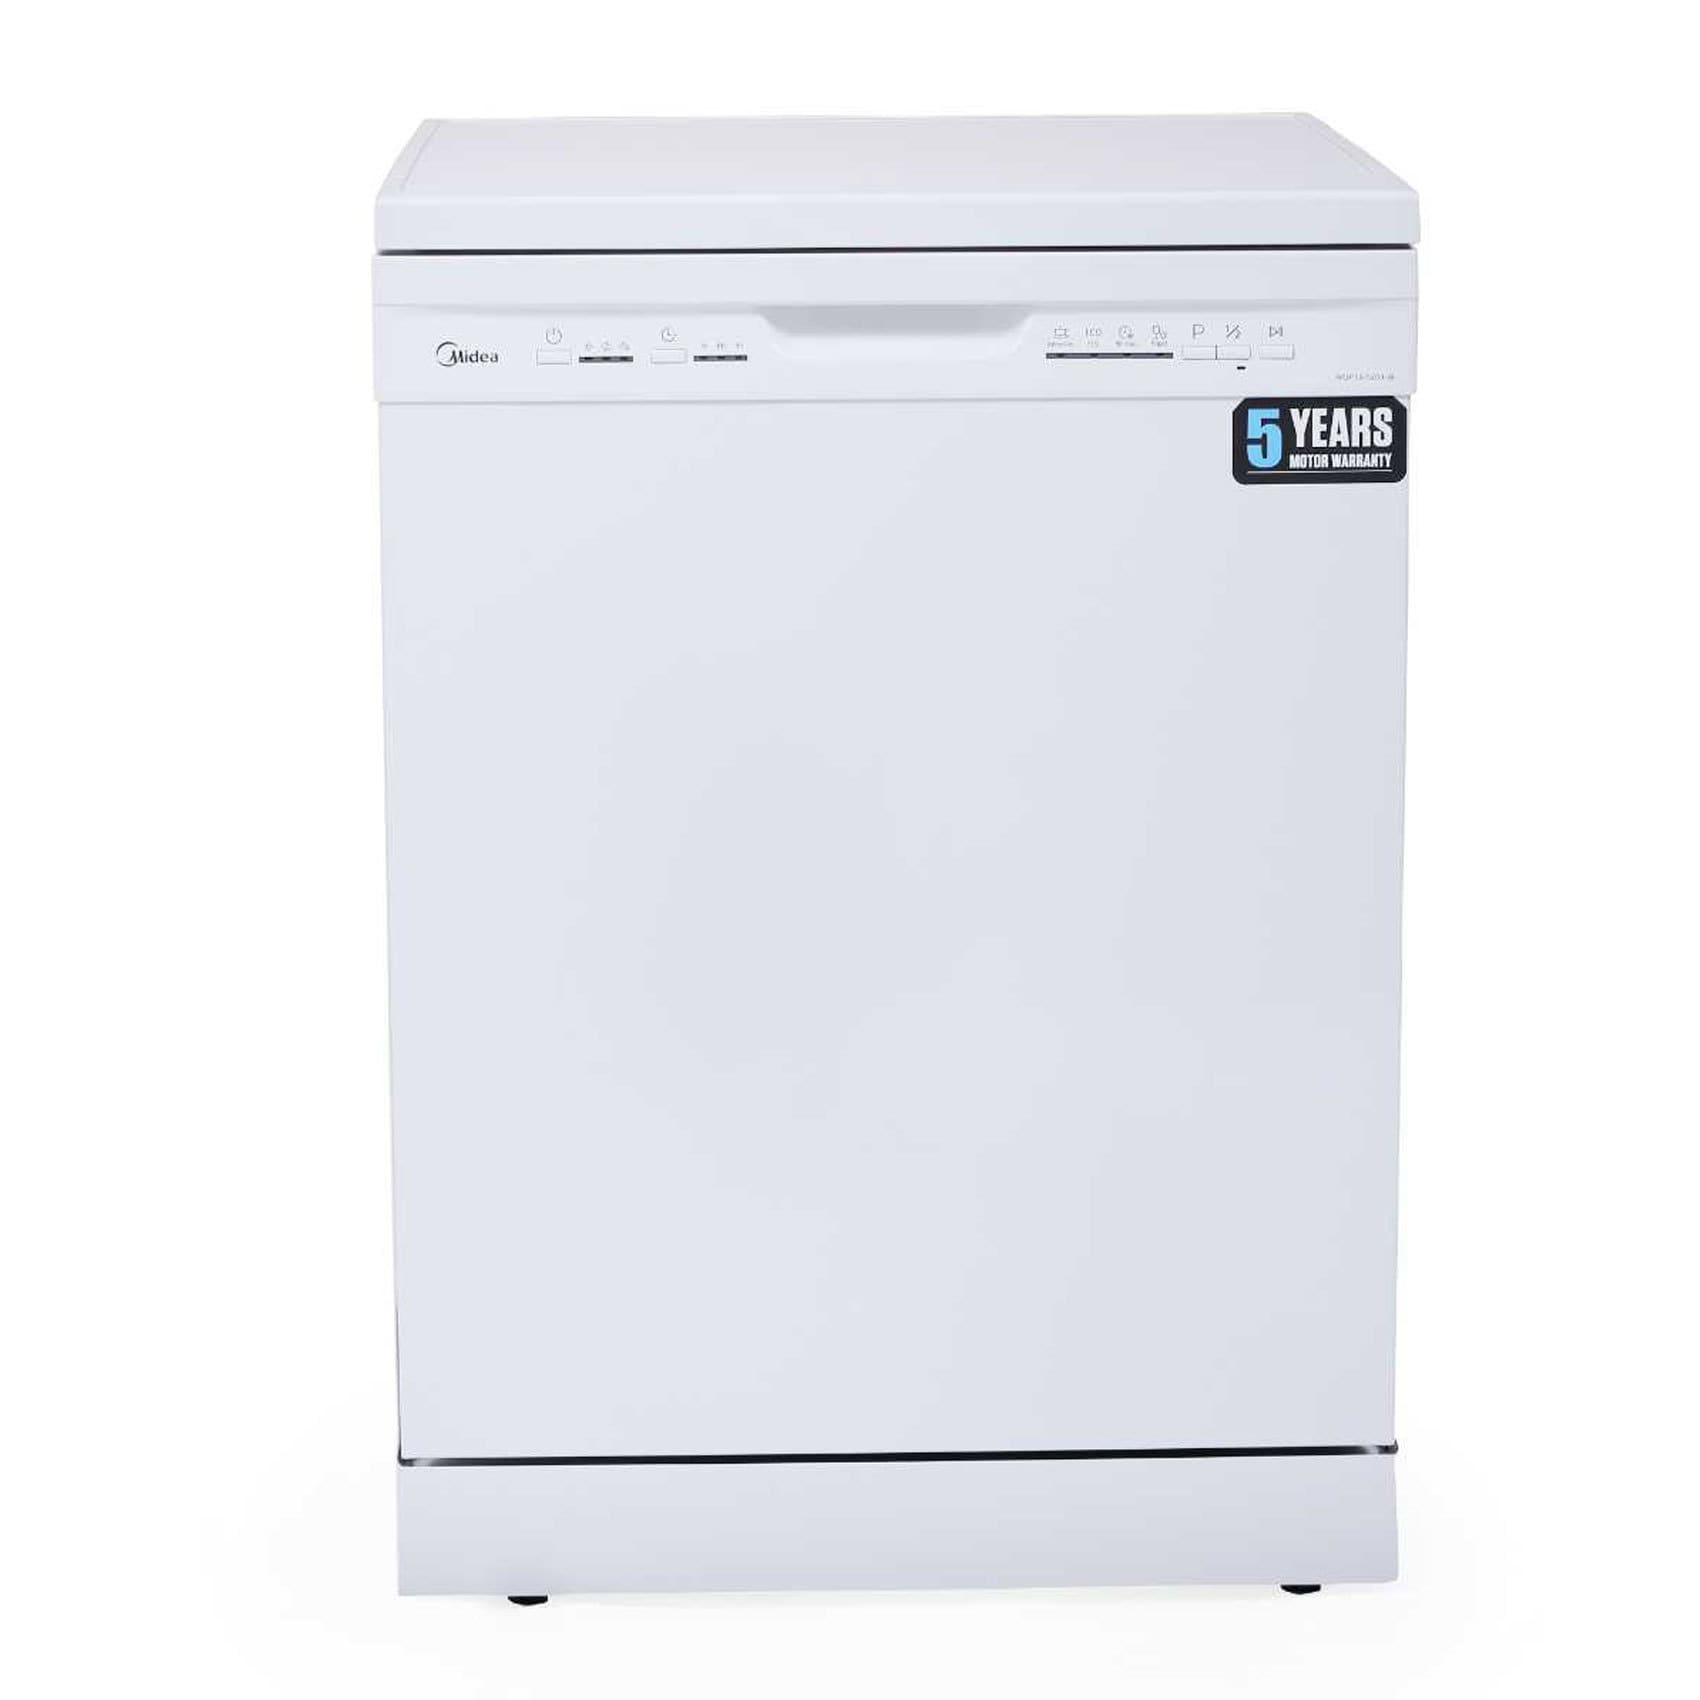 Buy Midea 5 Prograams 12 Place Settings Dishwasher White Wqp1253 W Online Shop Electronics Appliances On Carrefour Uae